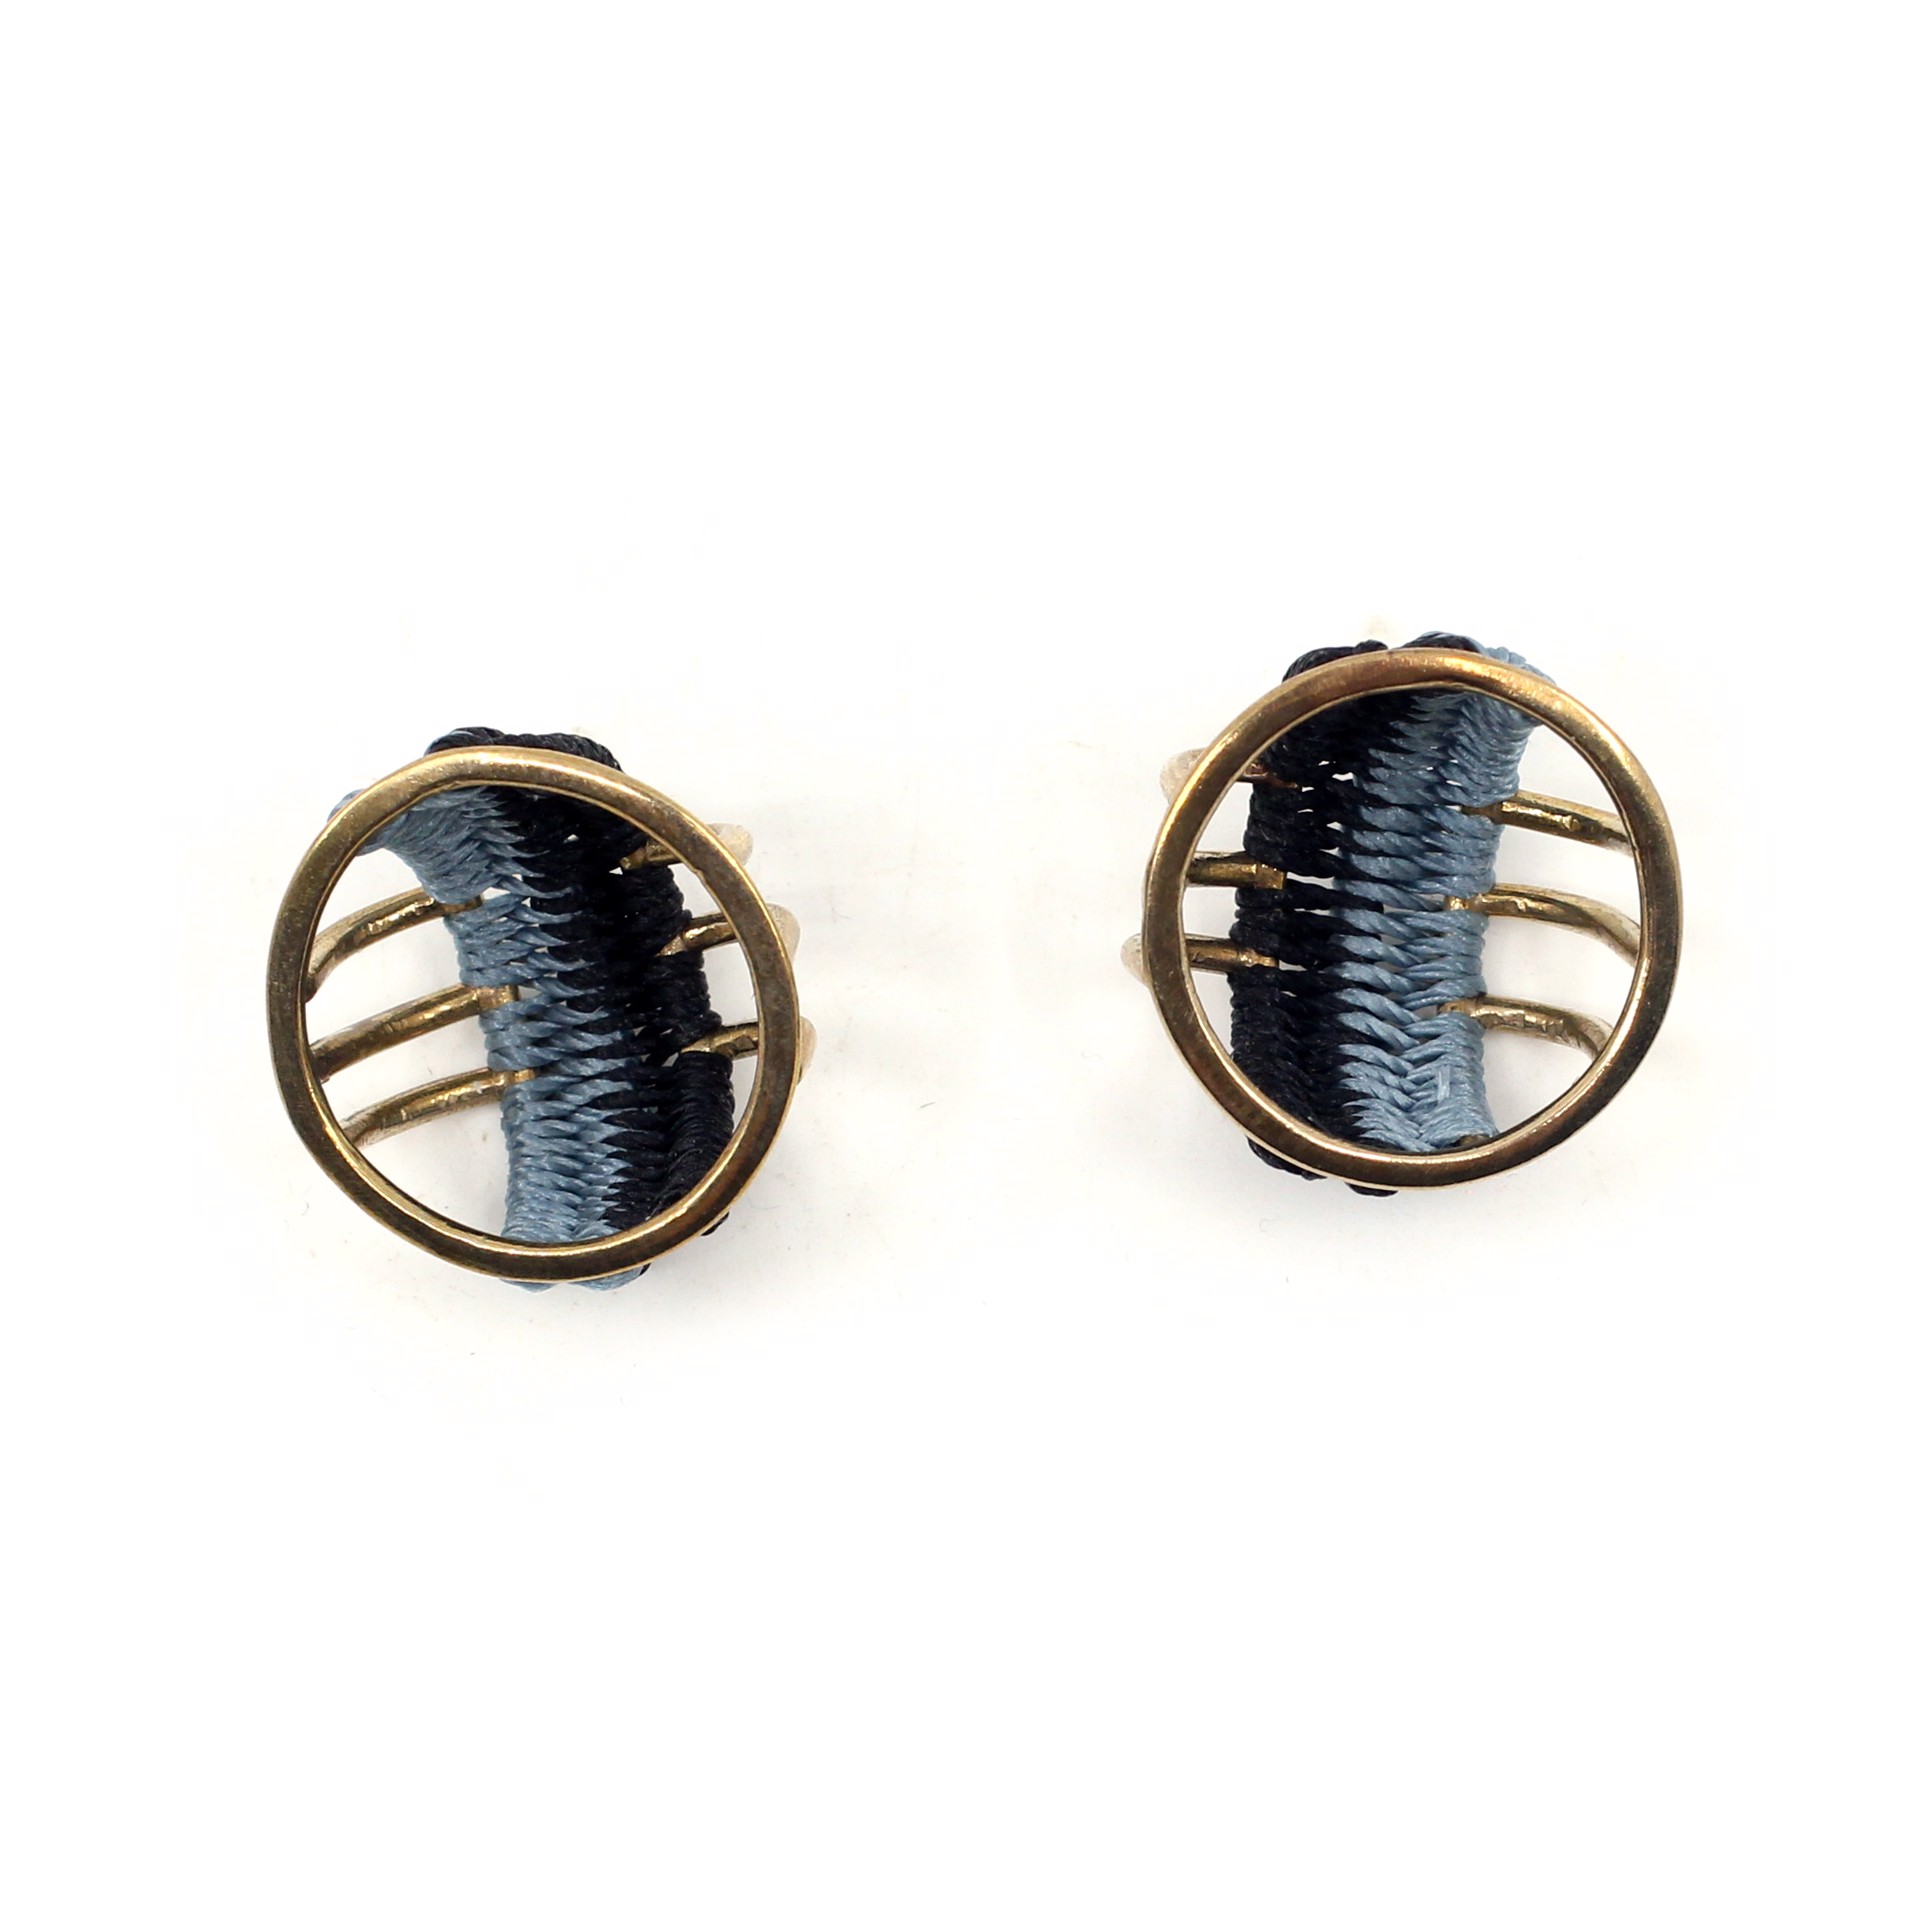 Basket Studs (blue/black) by Flag Mountain Jewelry